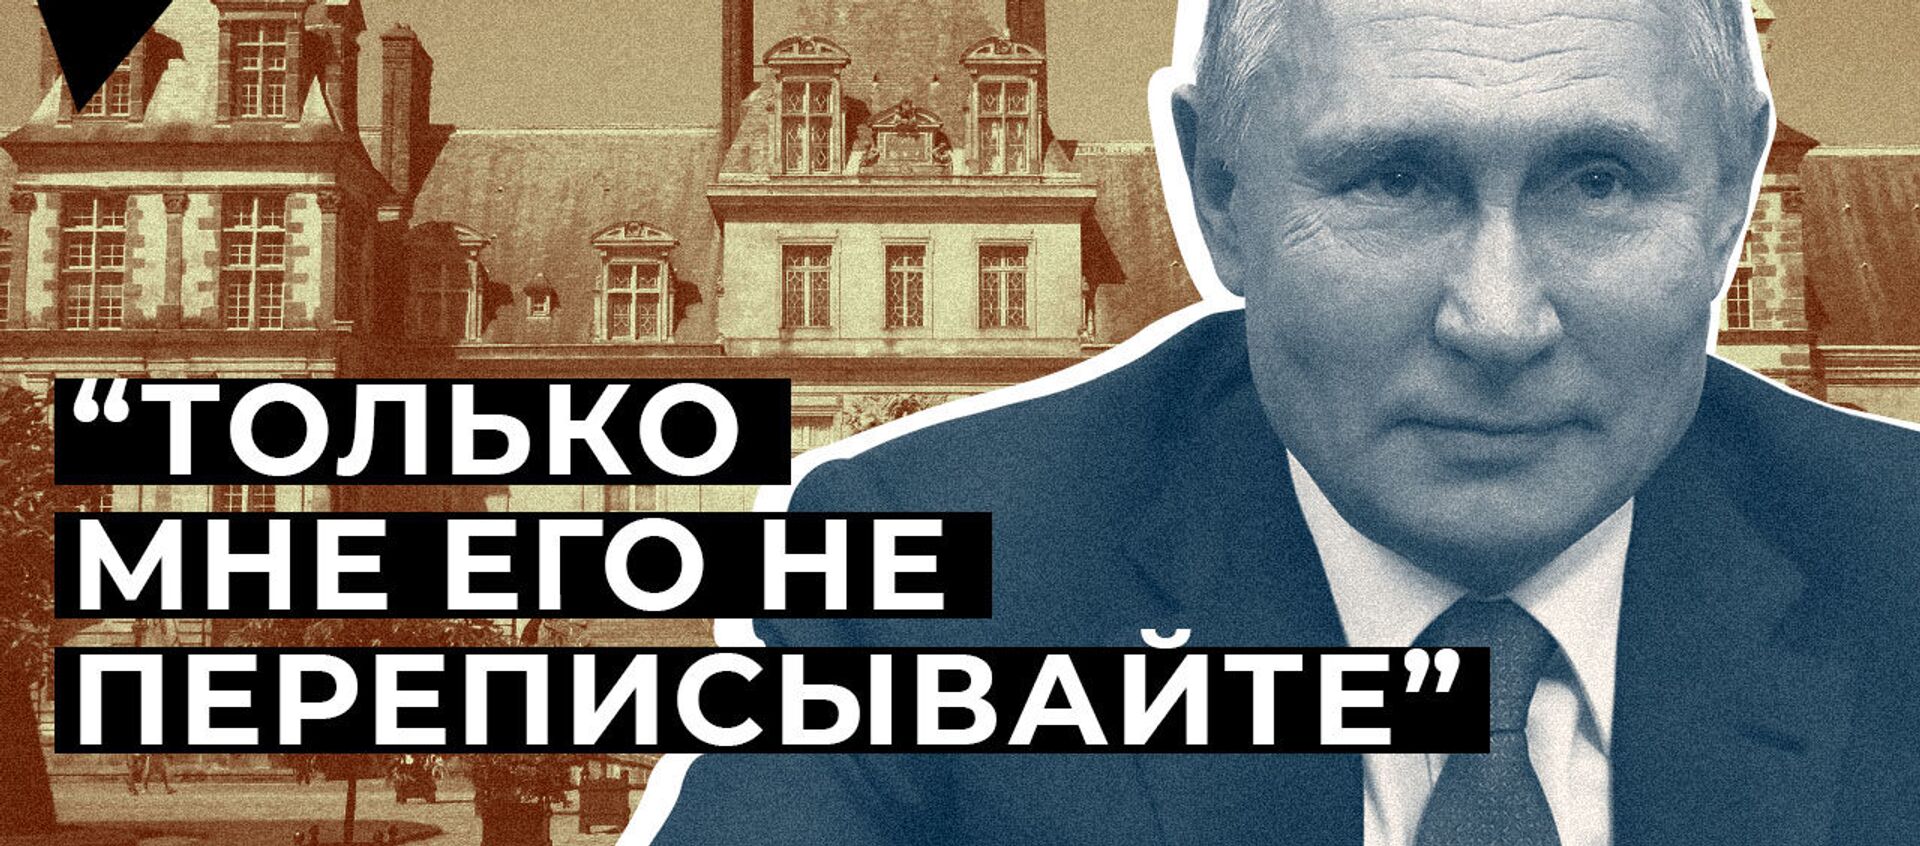 Putin poshutil pro “yeshe odin dvores” - video - Sputnik O‘zbekiston, 1920, 06.03.2021